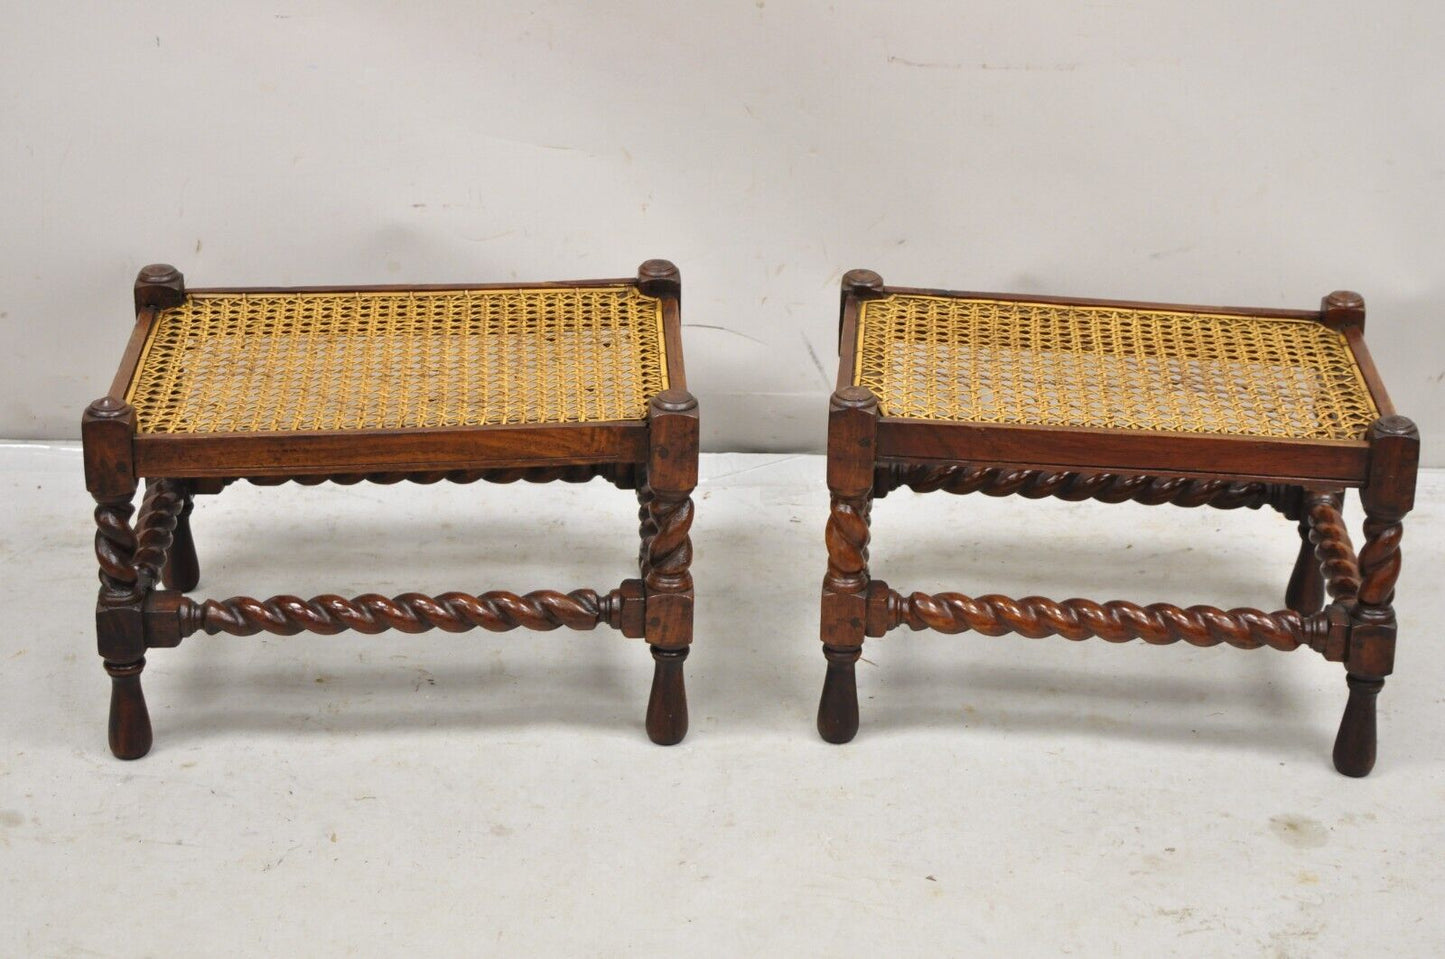 Antique Jacobean Turn Carved Walnut Handmade Cane Seat Footstool Ottoman - Pair